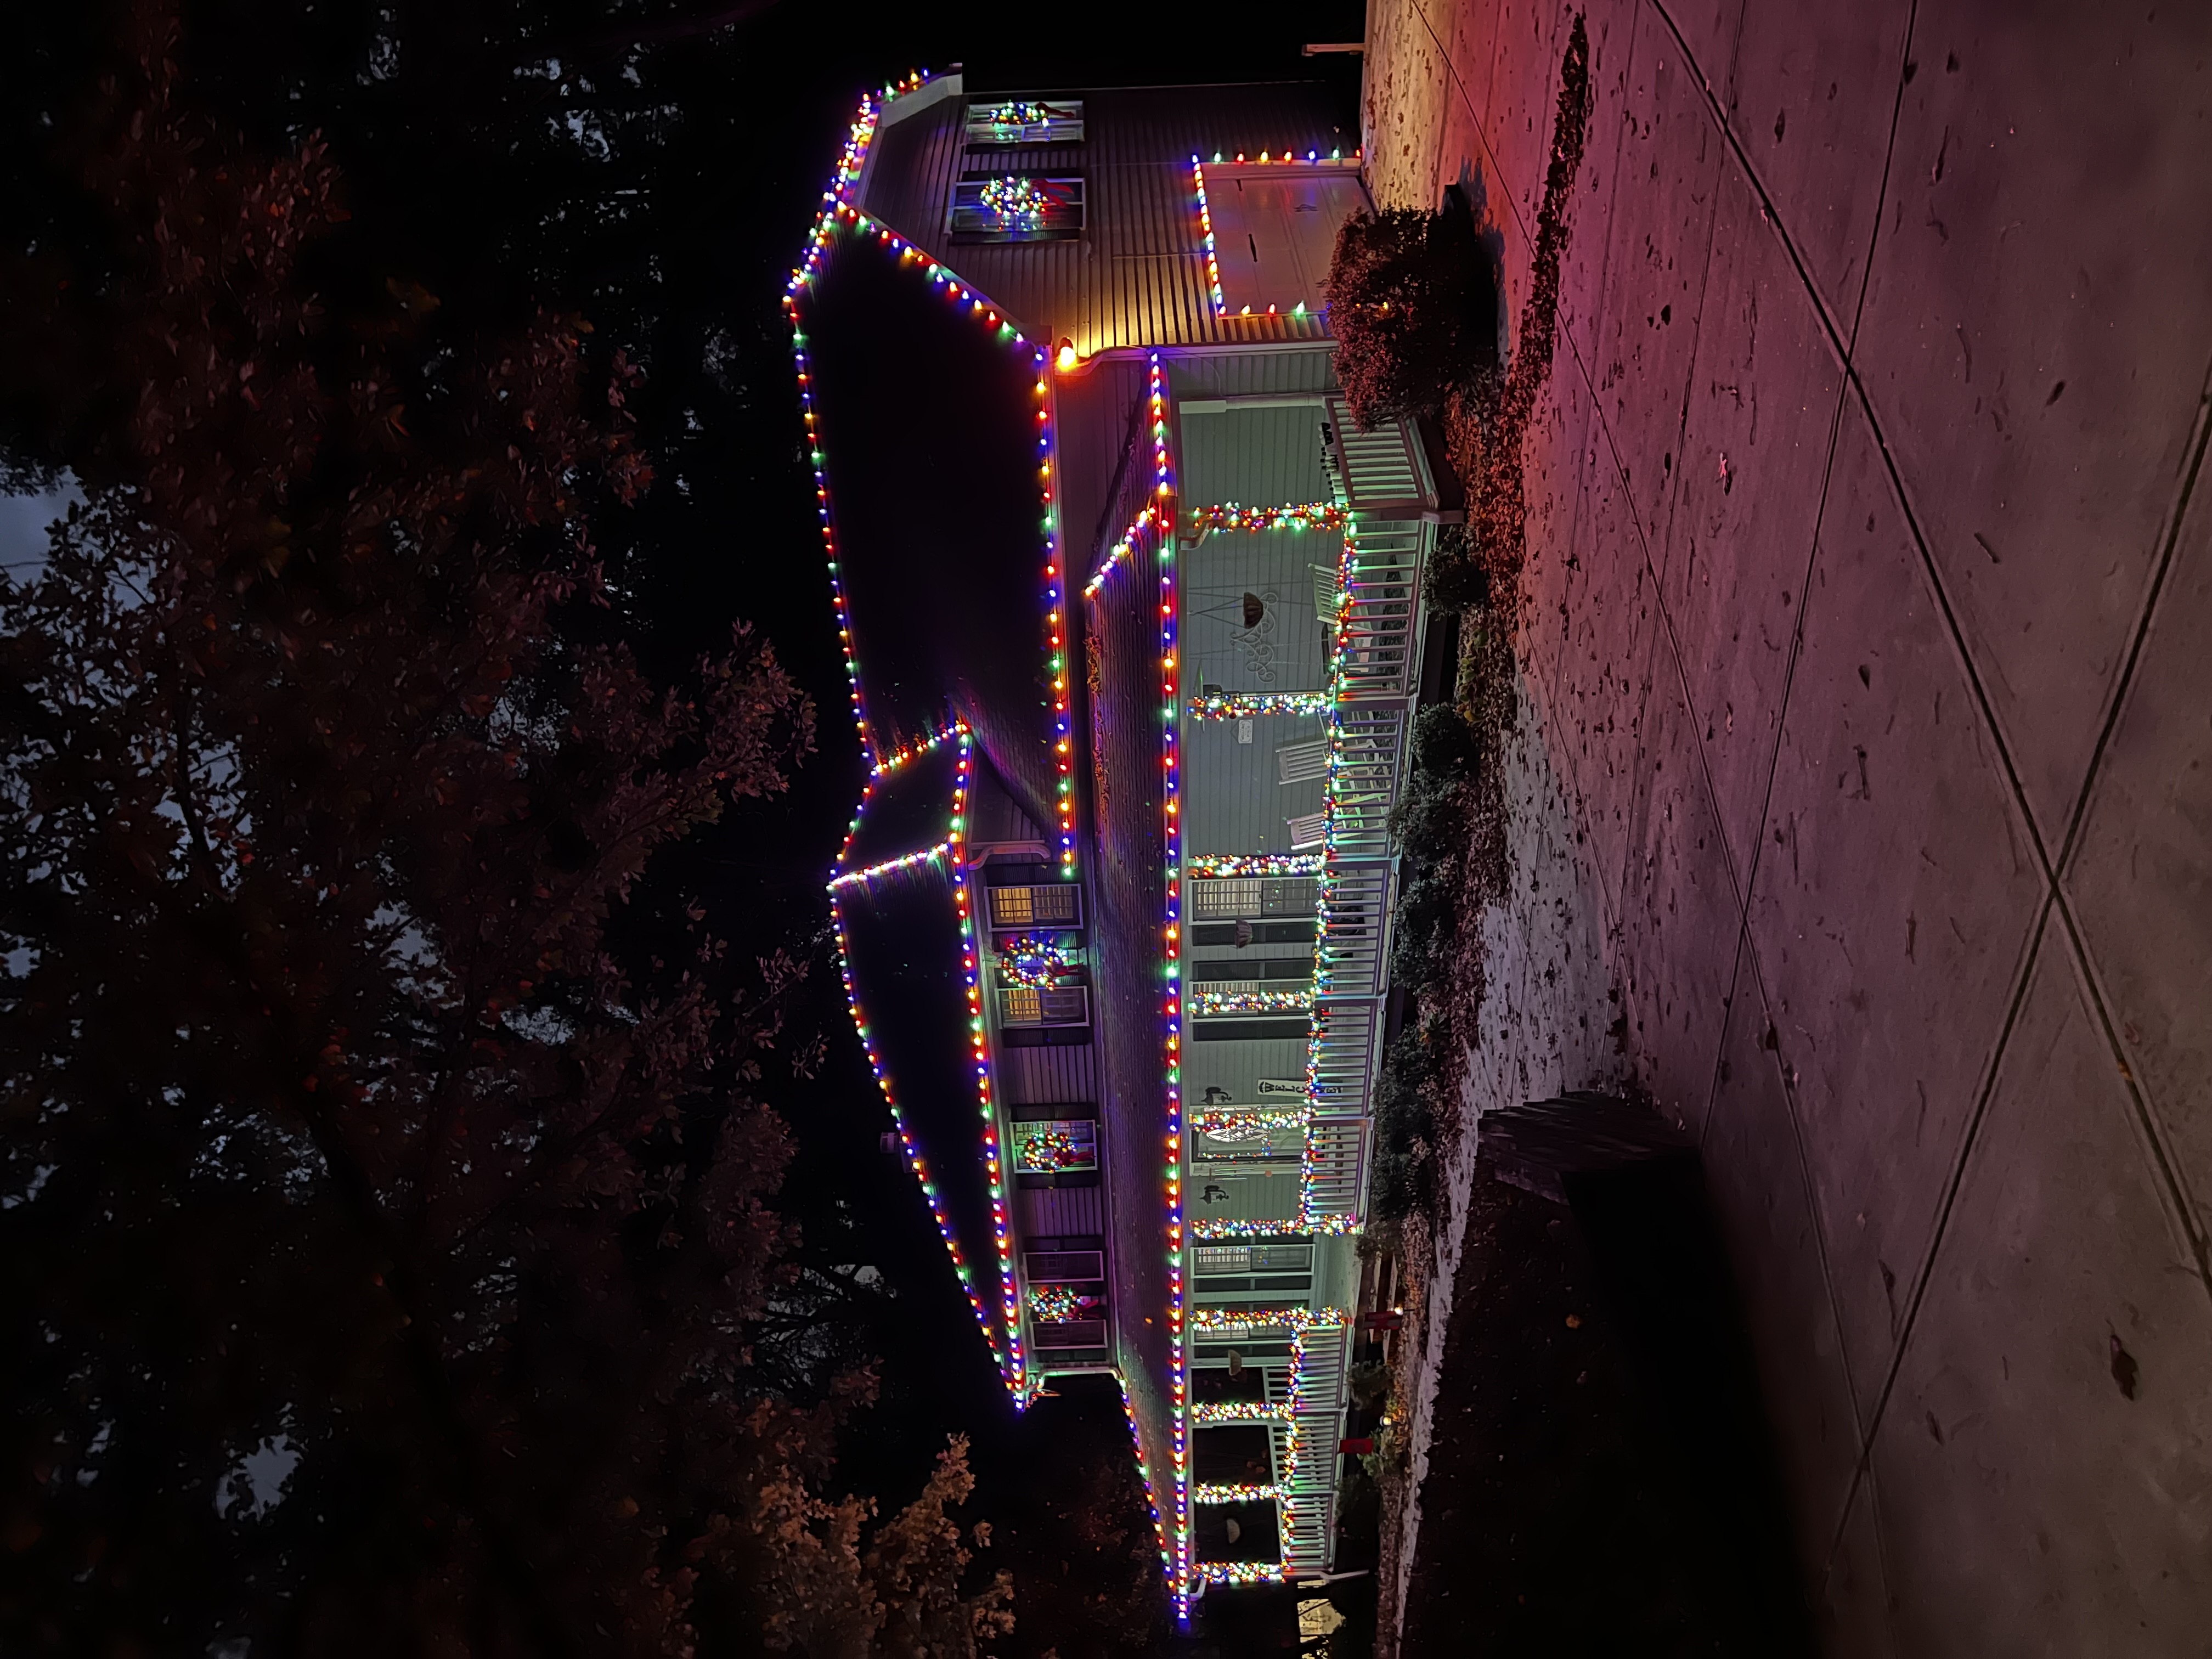 Colorful Christmas light install in Cumming, GA